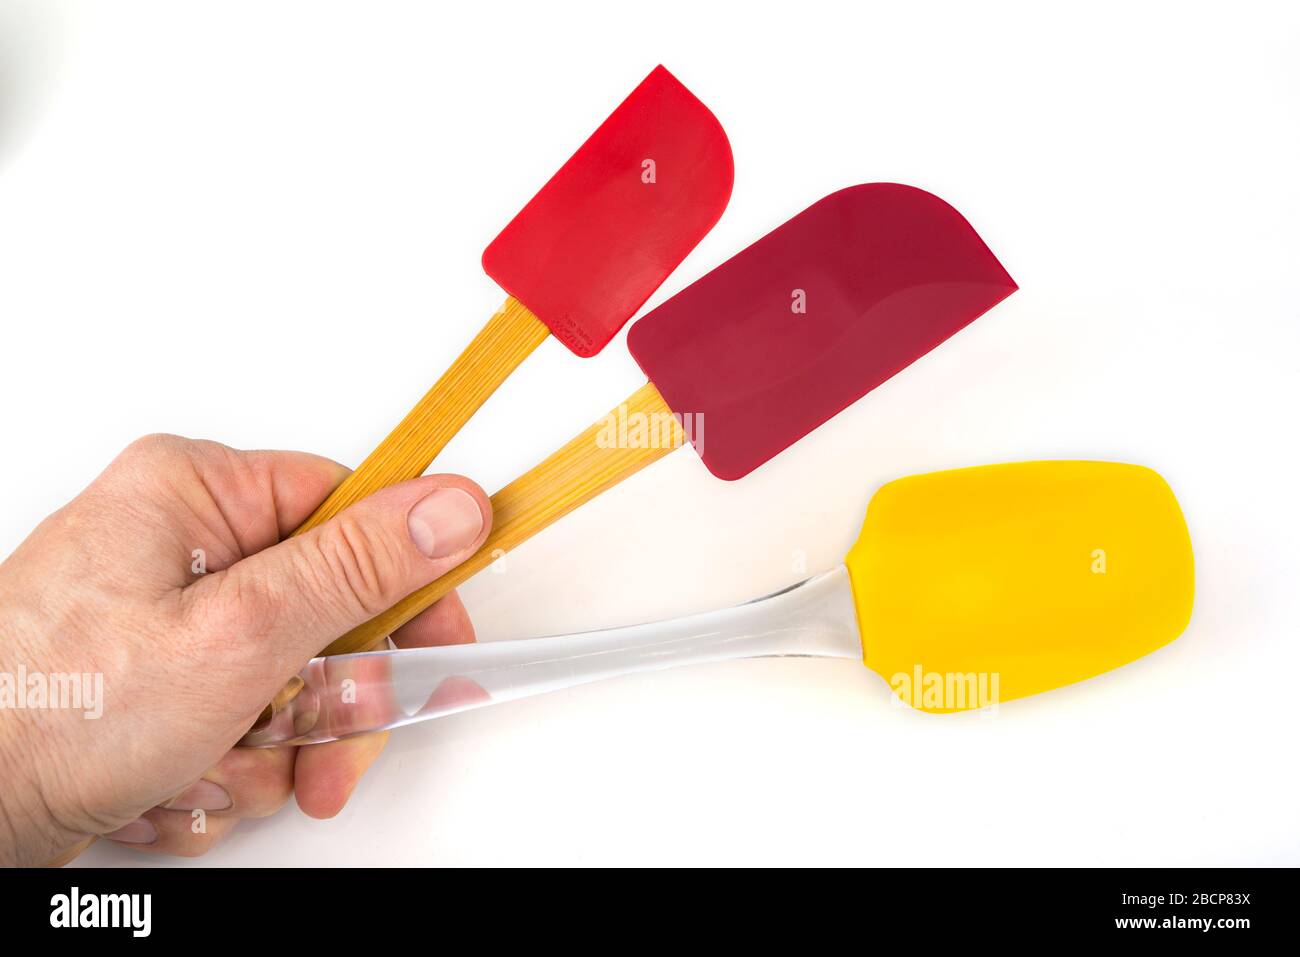 https://c8.alamy.com/comp/2BCP83X/kitchen-rubber-spatula-on-a-white-background-2BCP83X.jpg